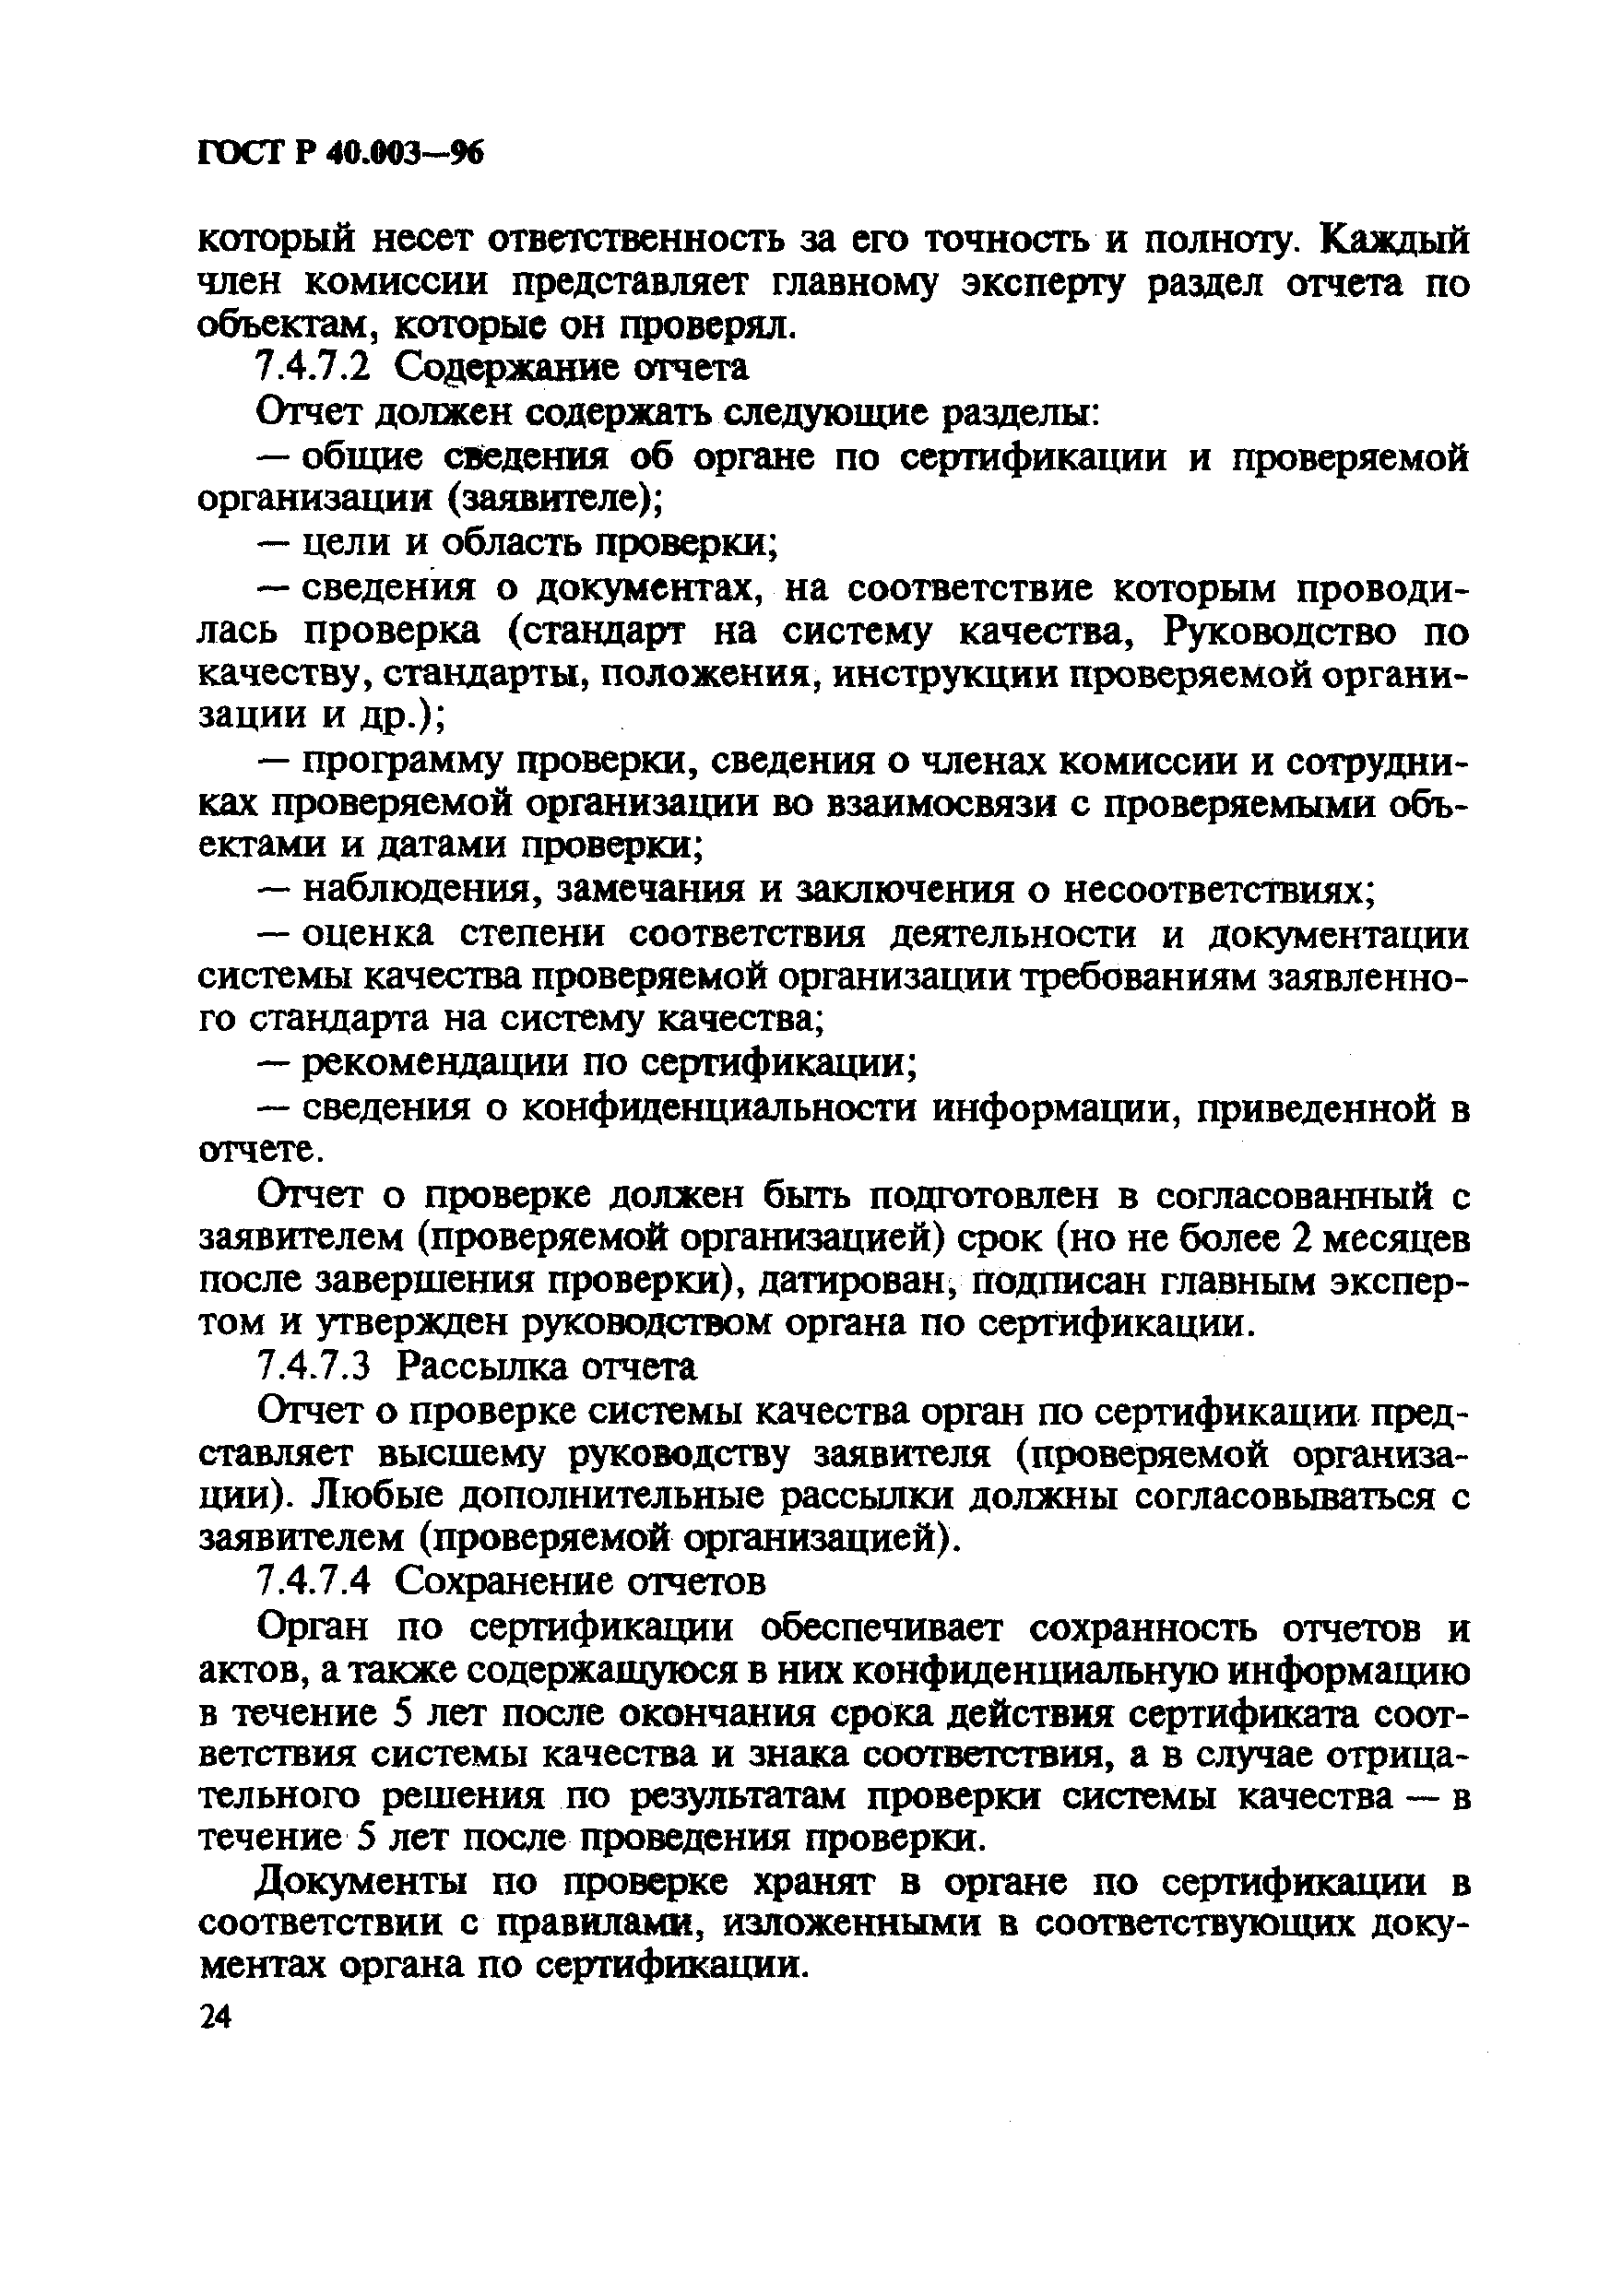 ГОСТ Р 40.003-96